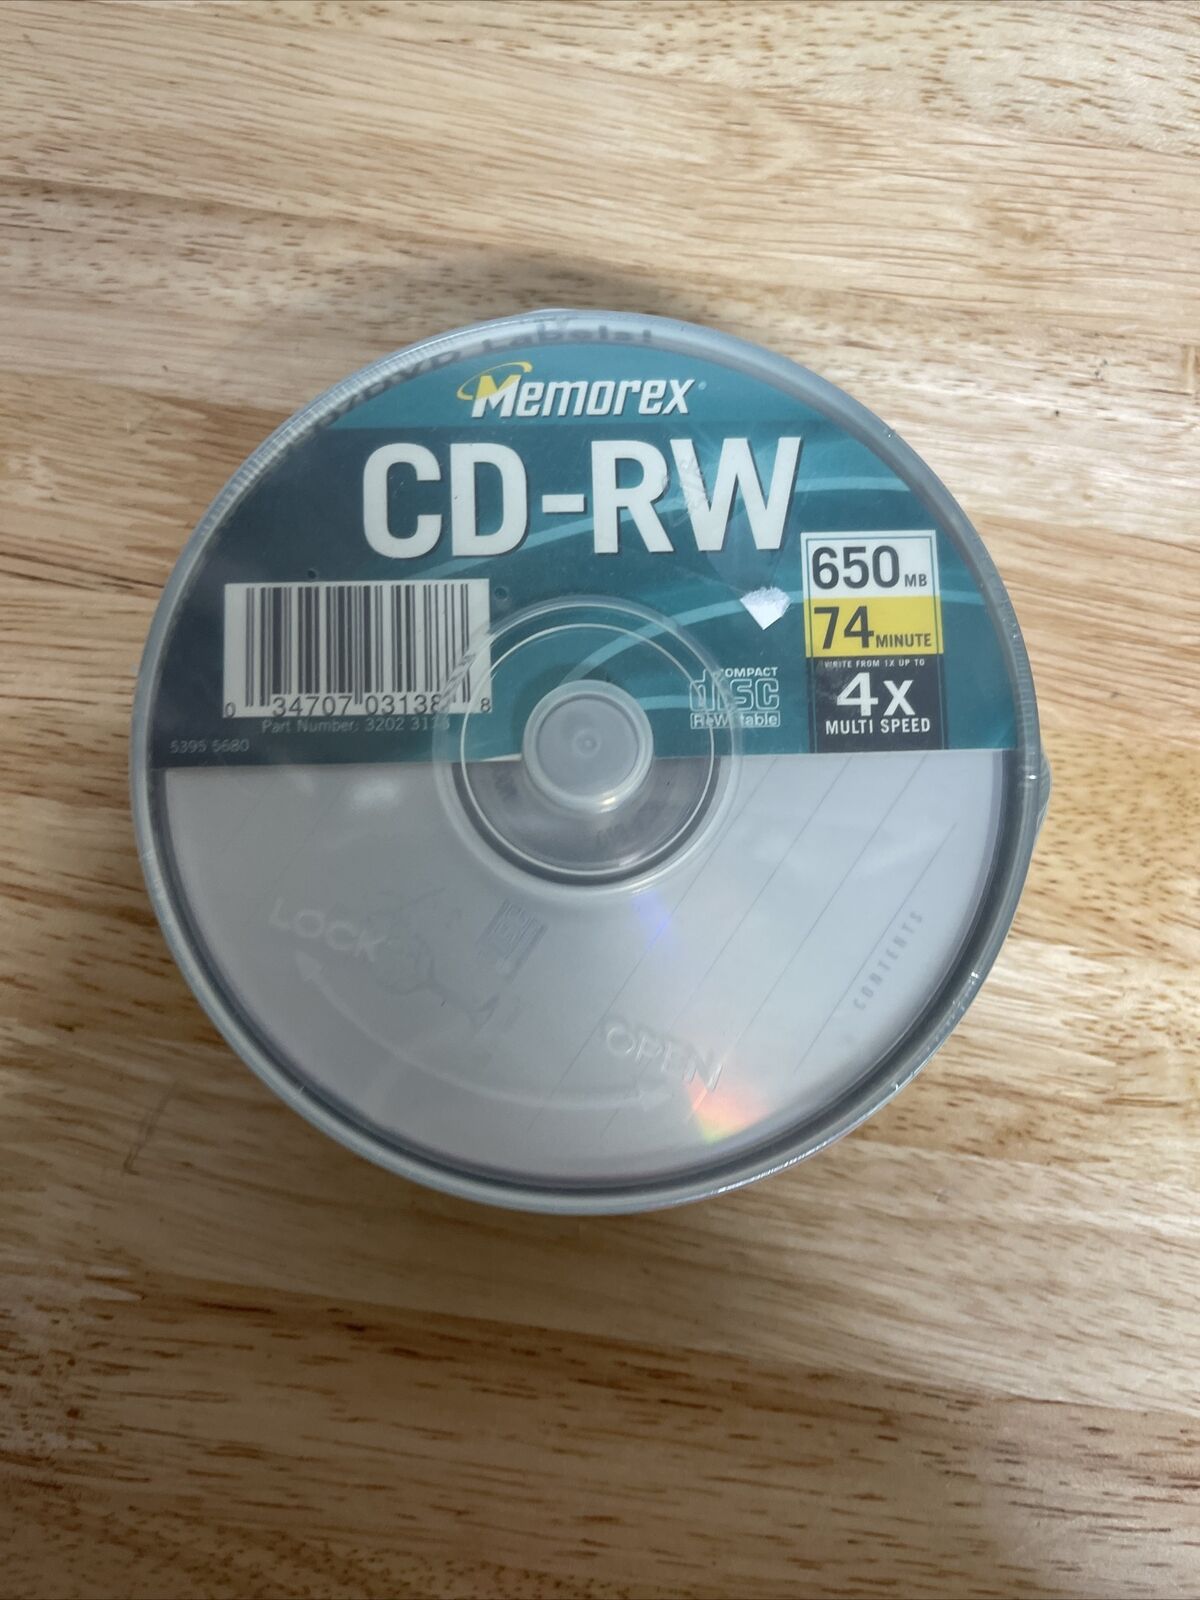 Memorex 650MB 4x Data CD-RW 74 min Rewritable Blank Discs 25 Pack Spindle 